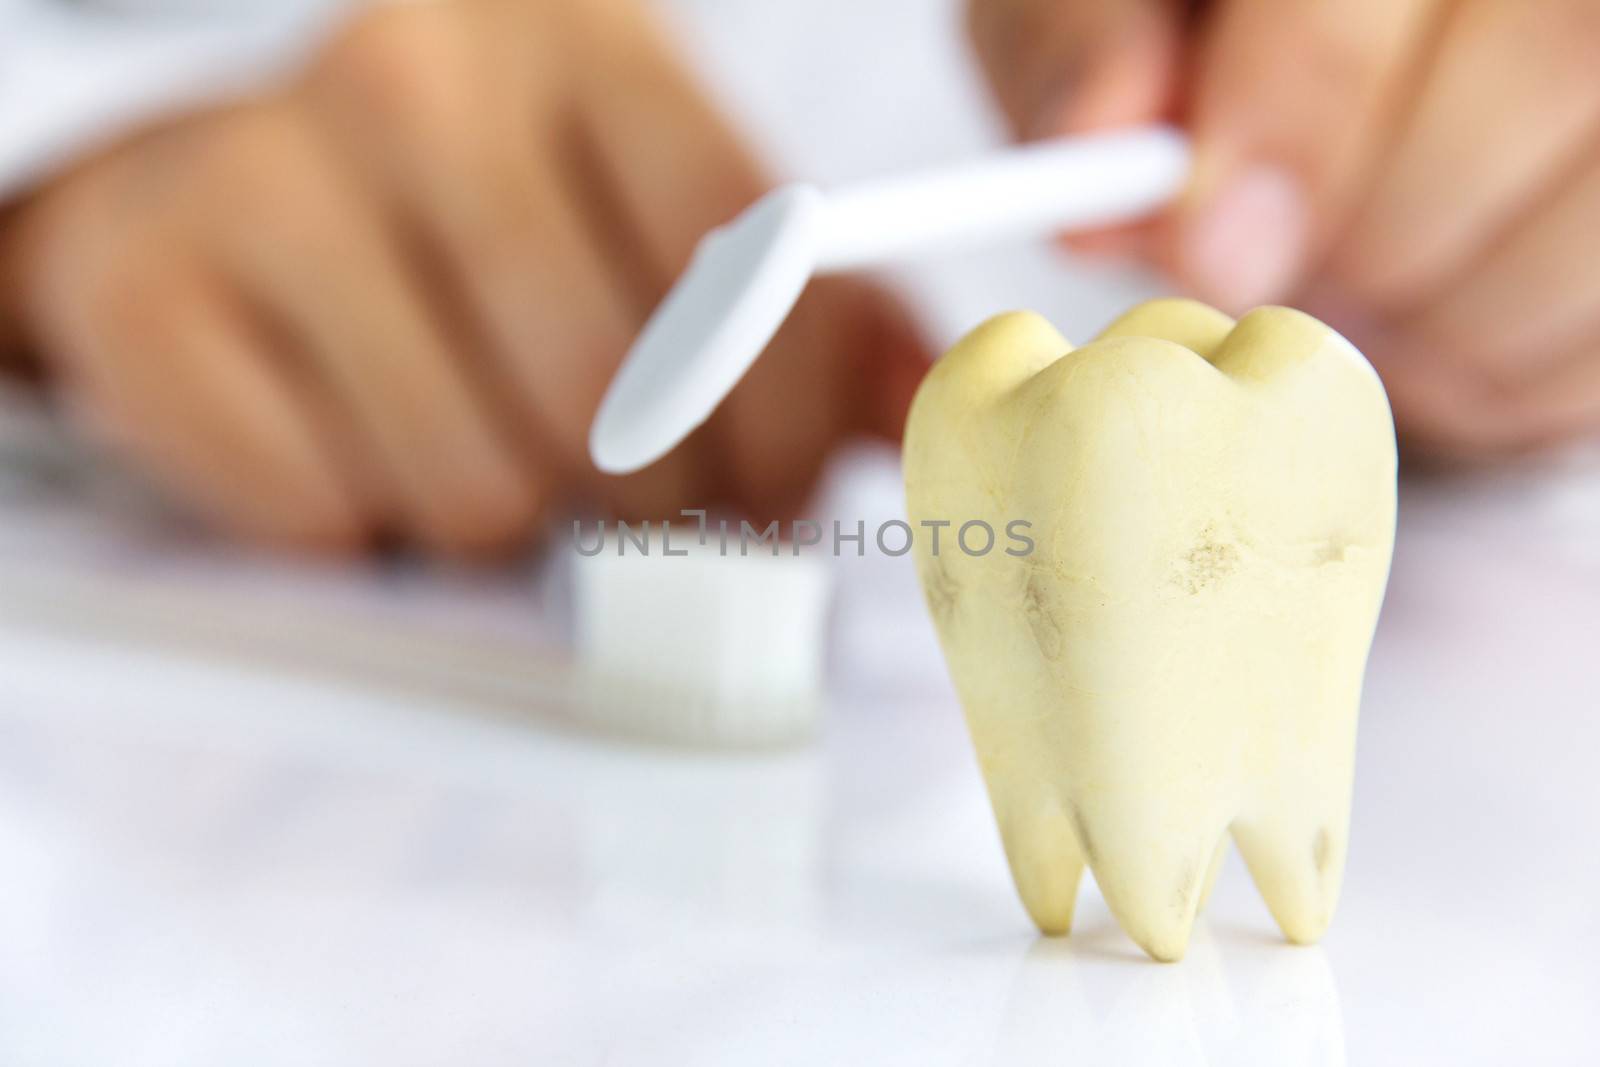 dental hygiene concept by ponsulak